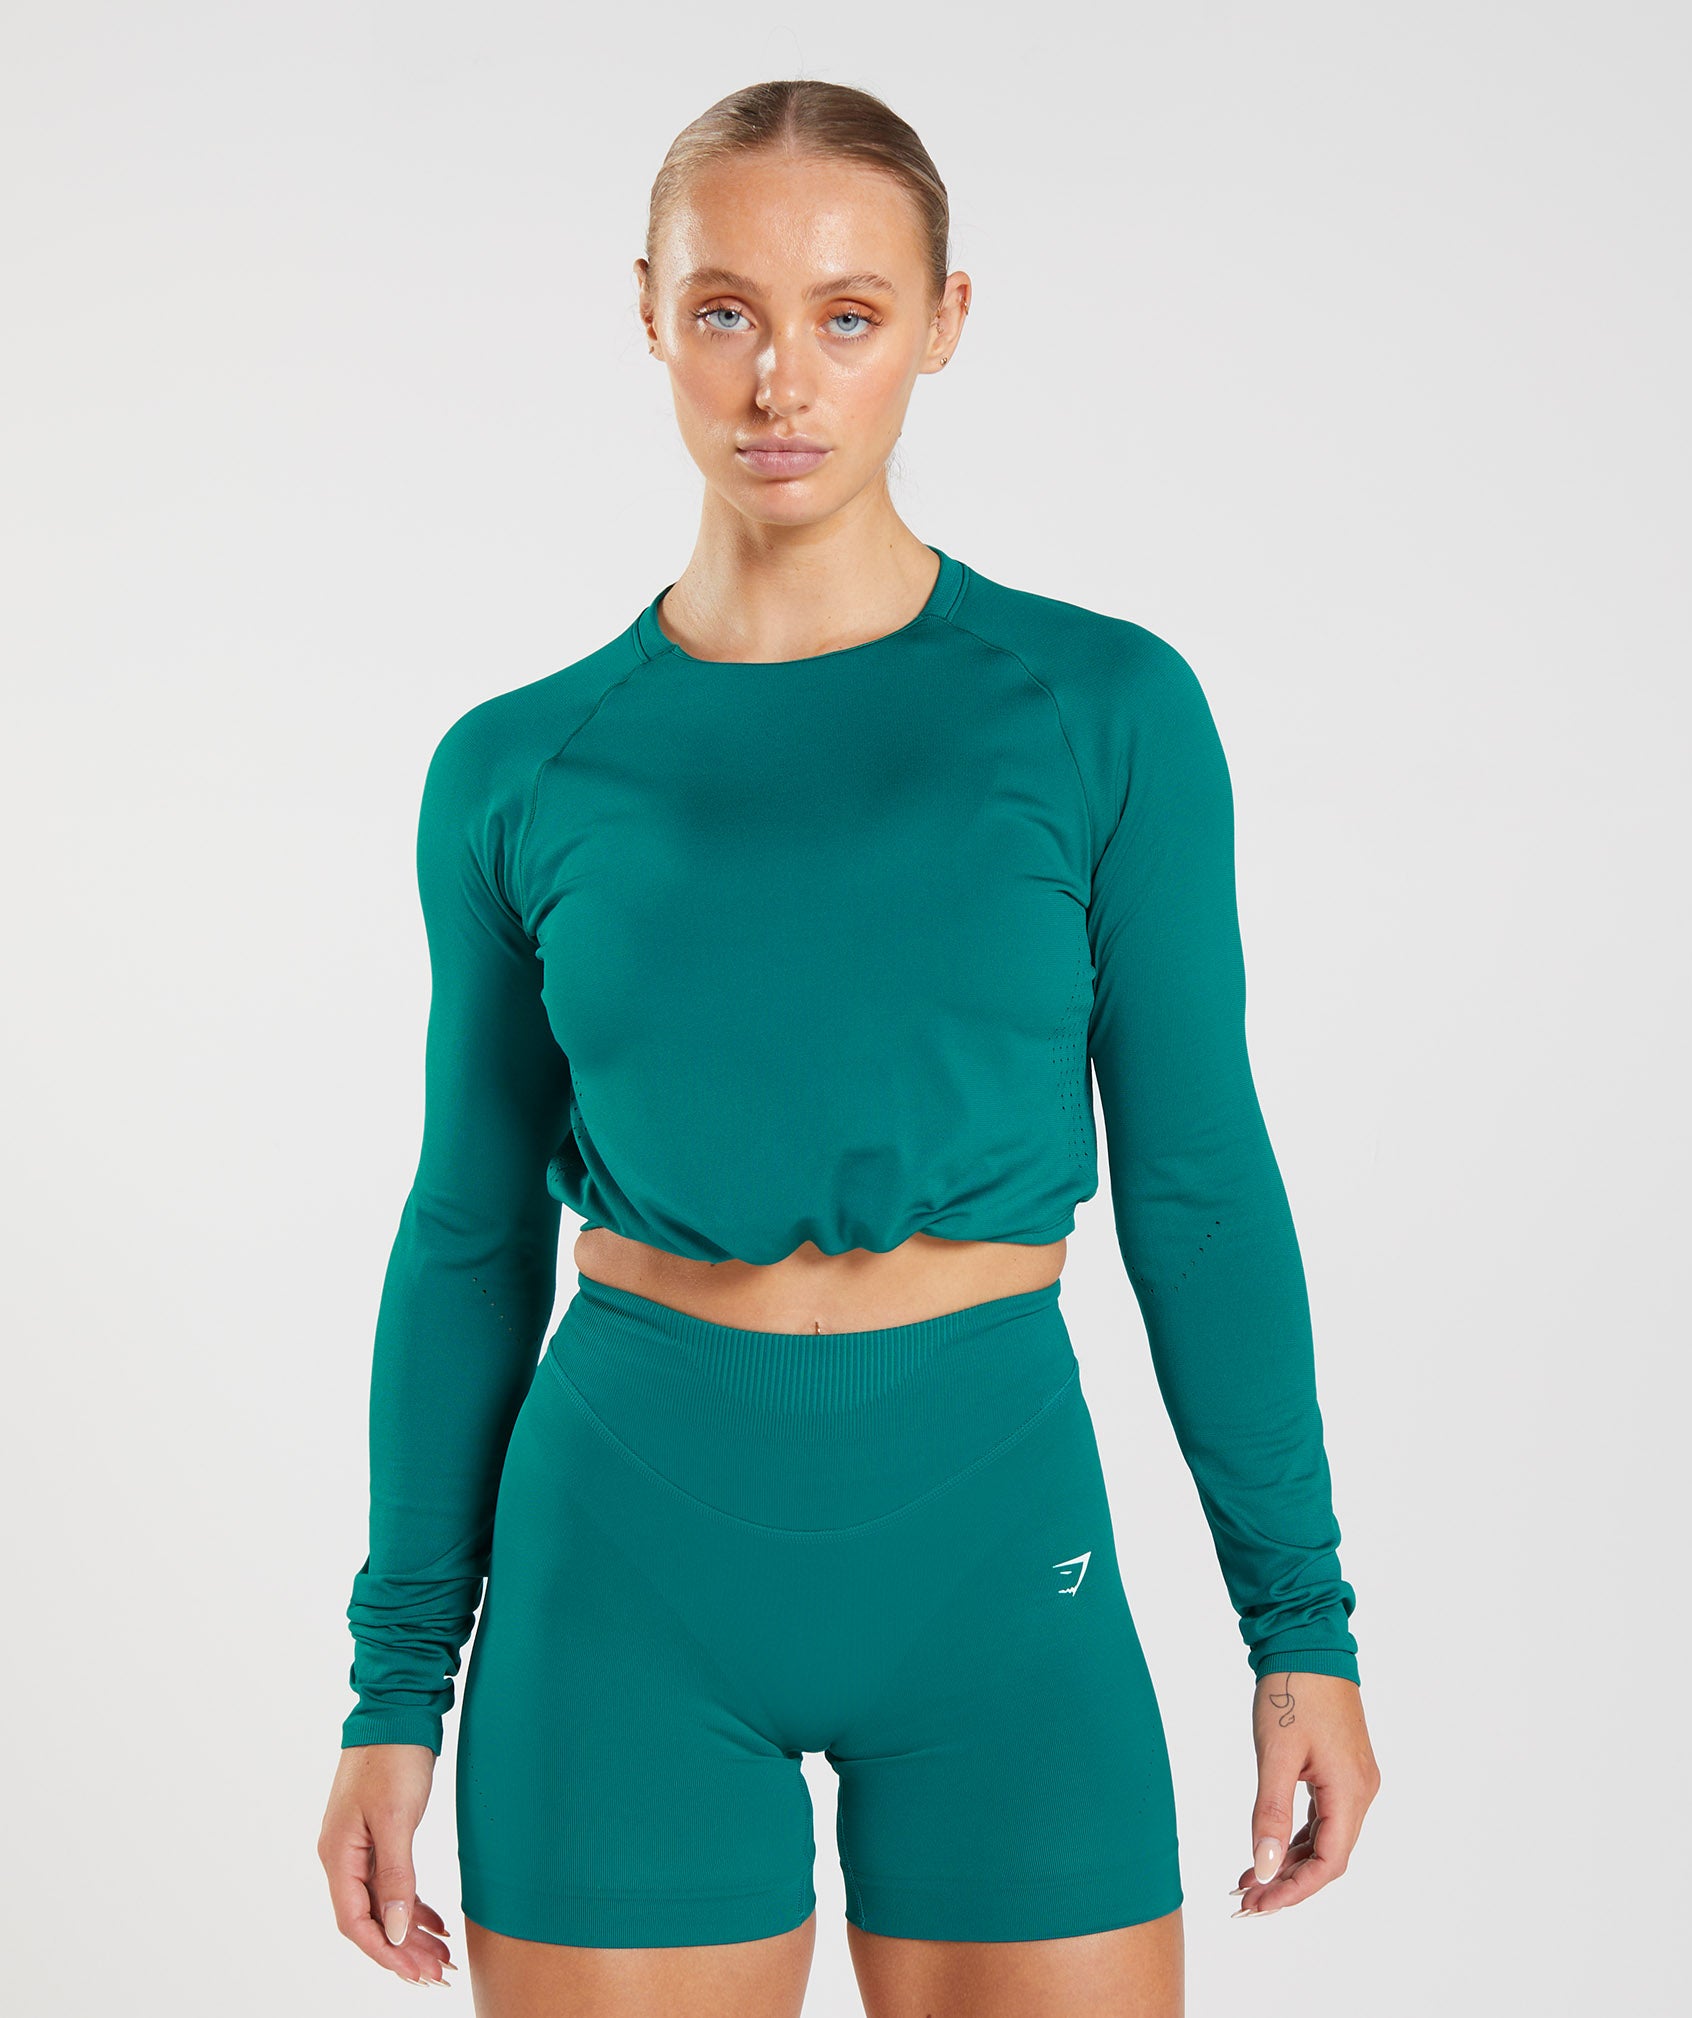 UNISSU Women's Long Sleeve Crop Tops Workout Shirts Seamless with